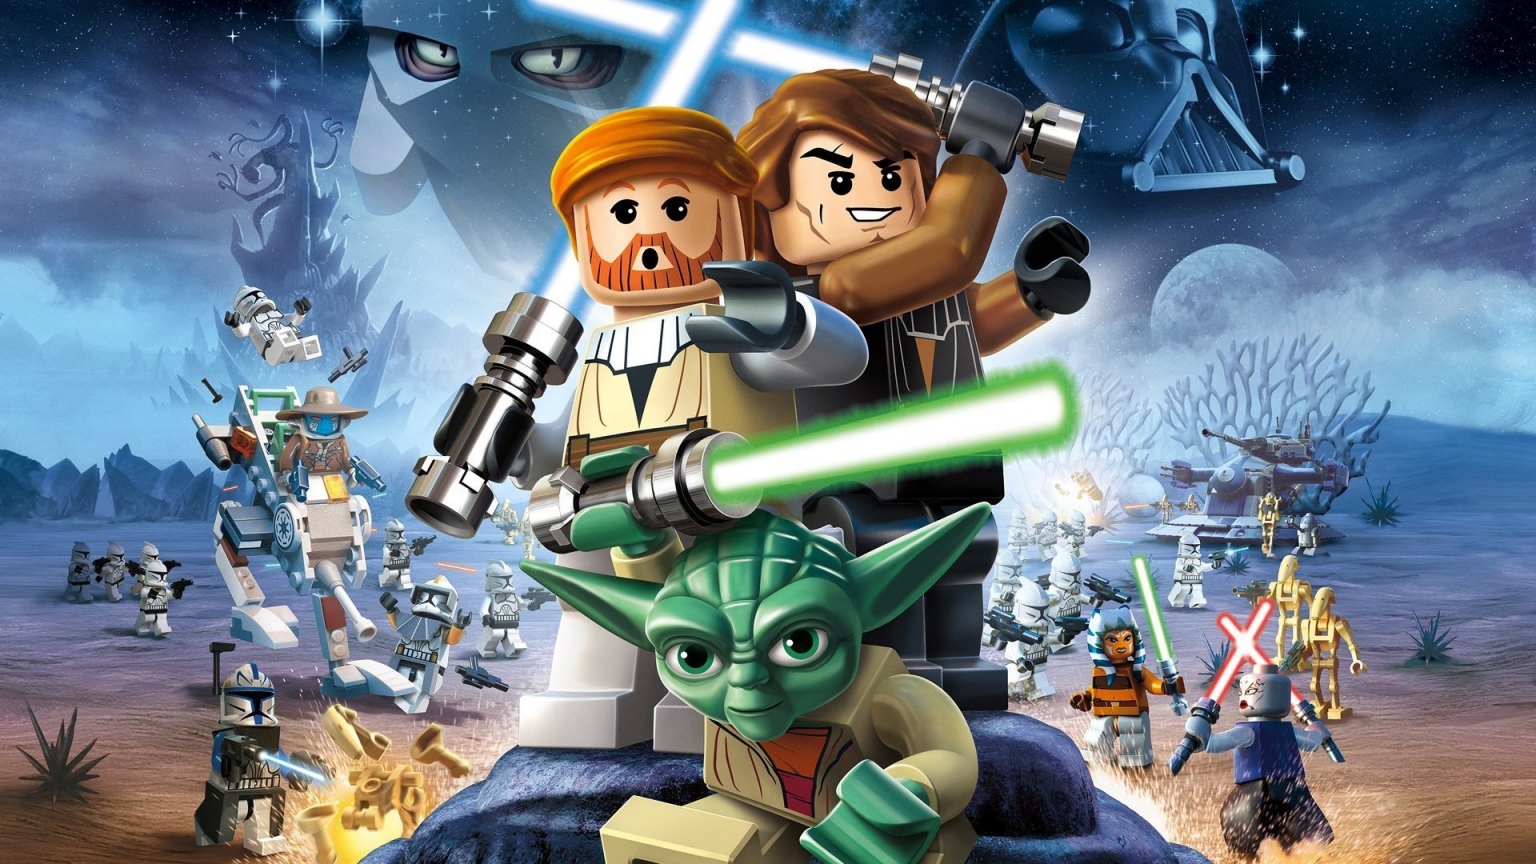 Lego Star Wars for 1536 x 864 HDTV resolution